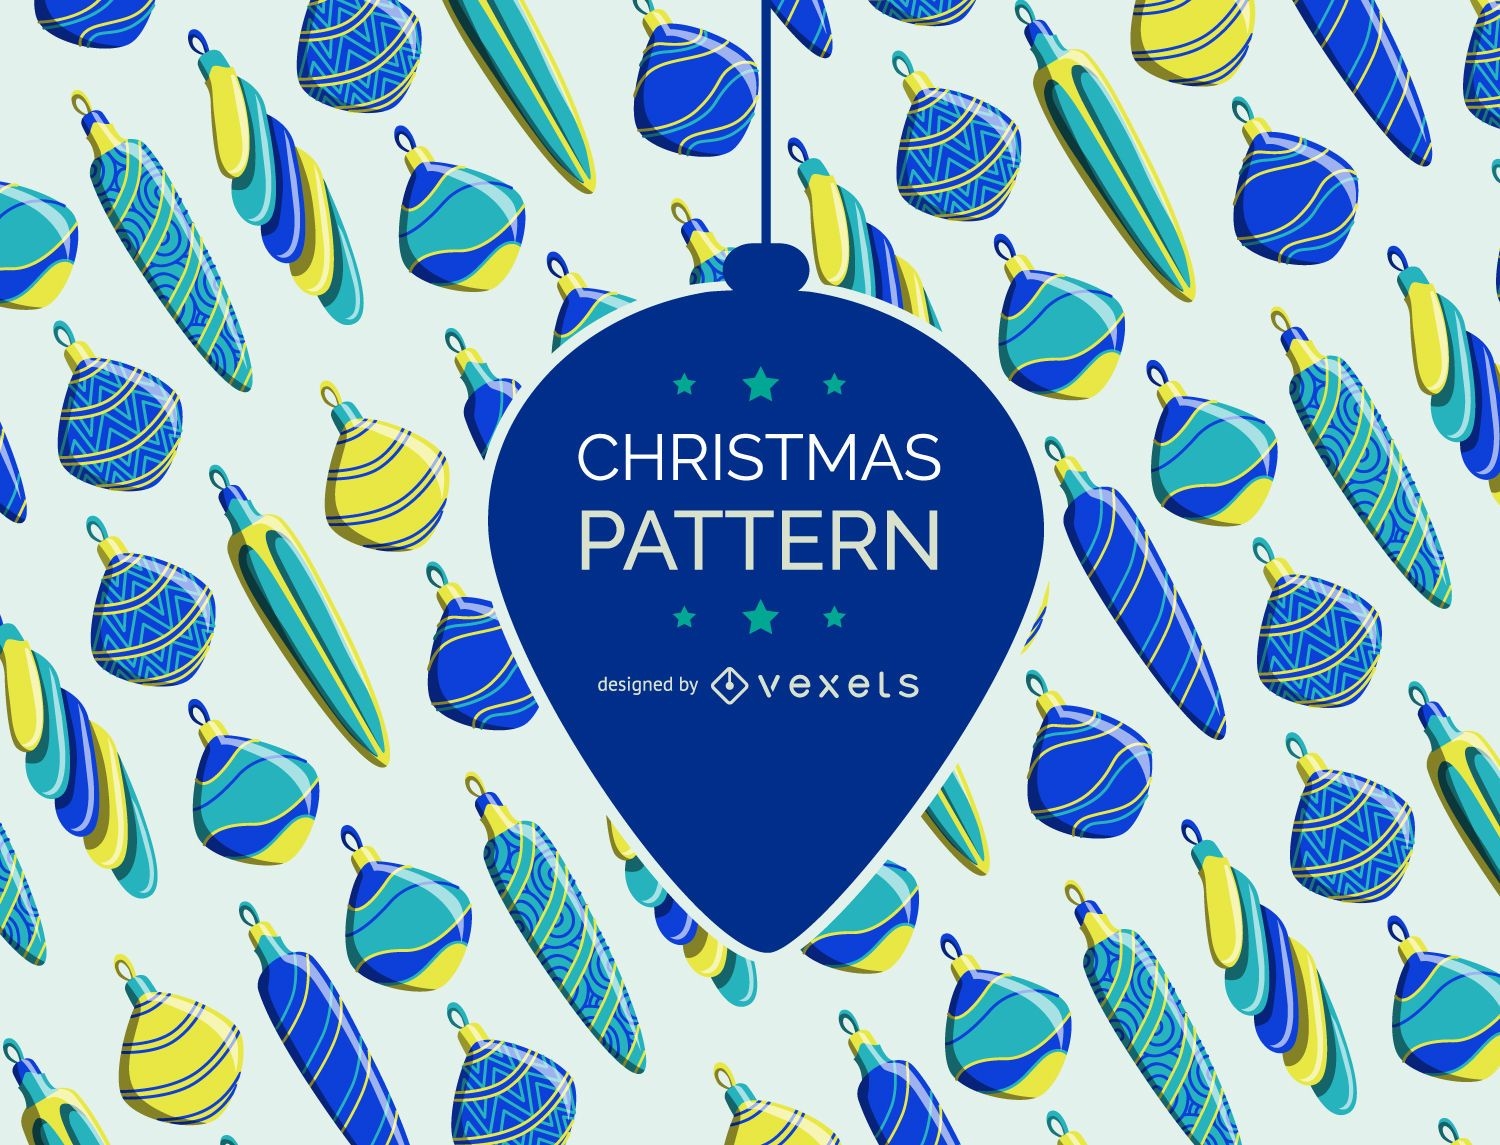 Vintage Christmas ornament pattern